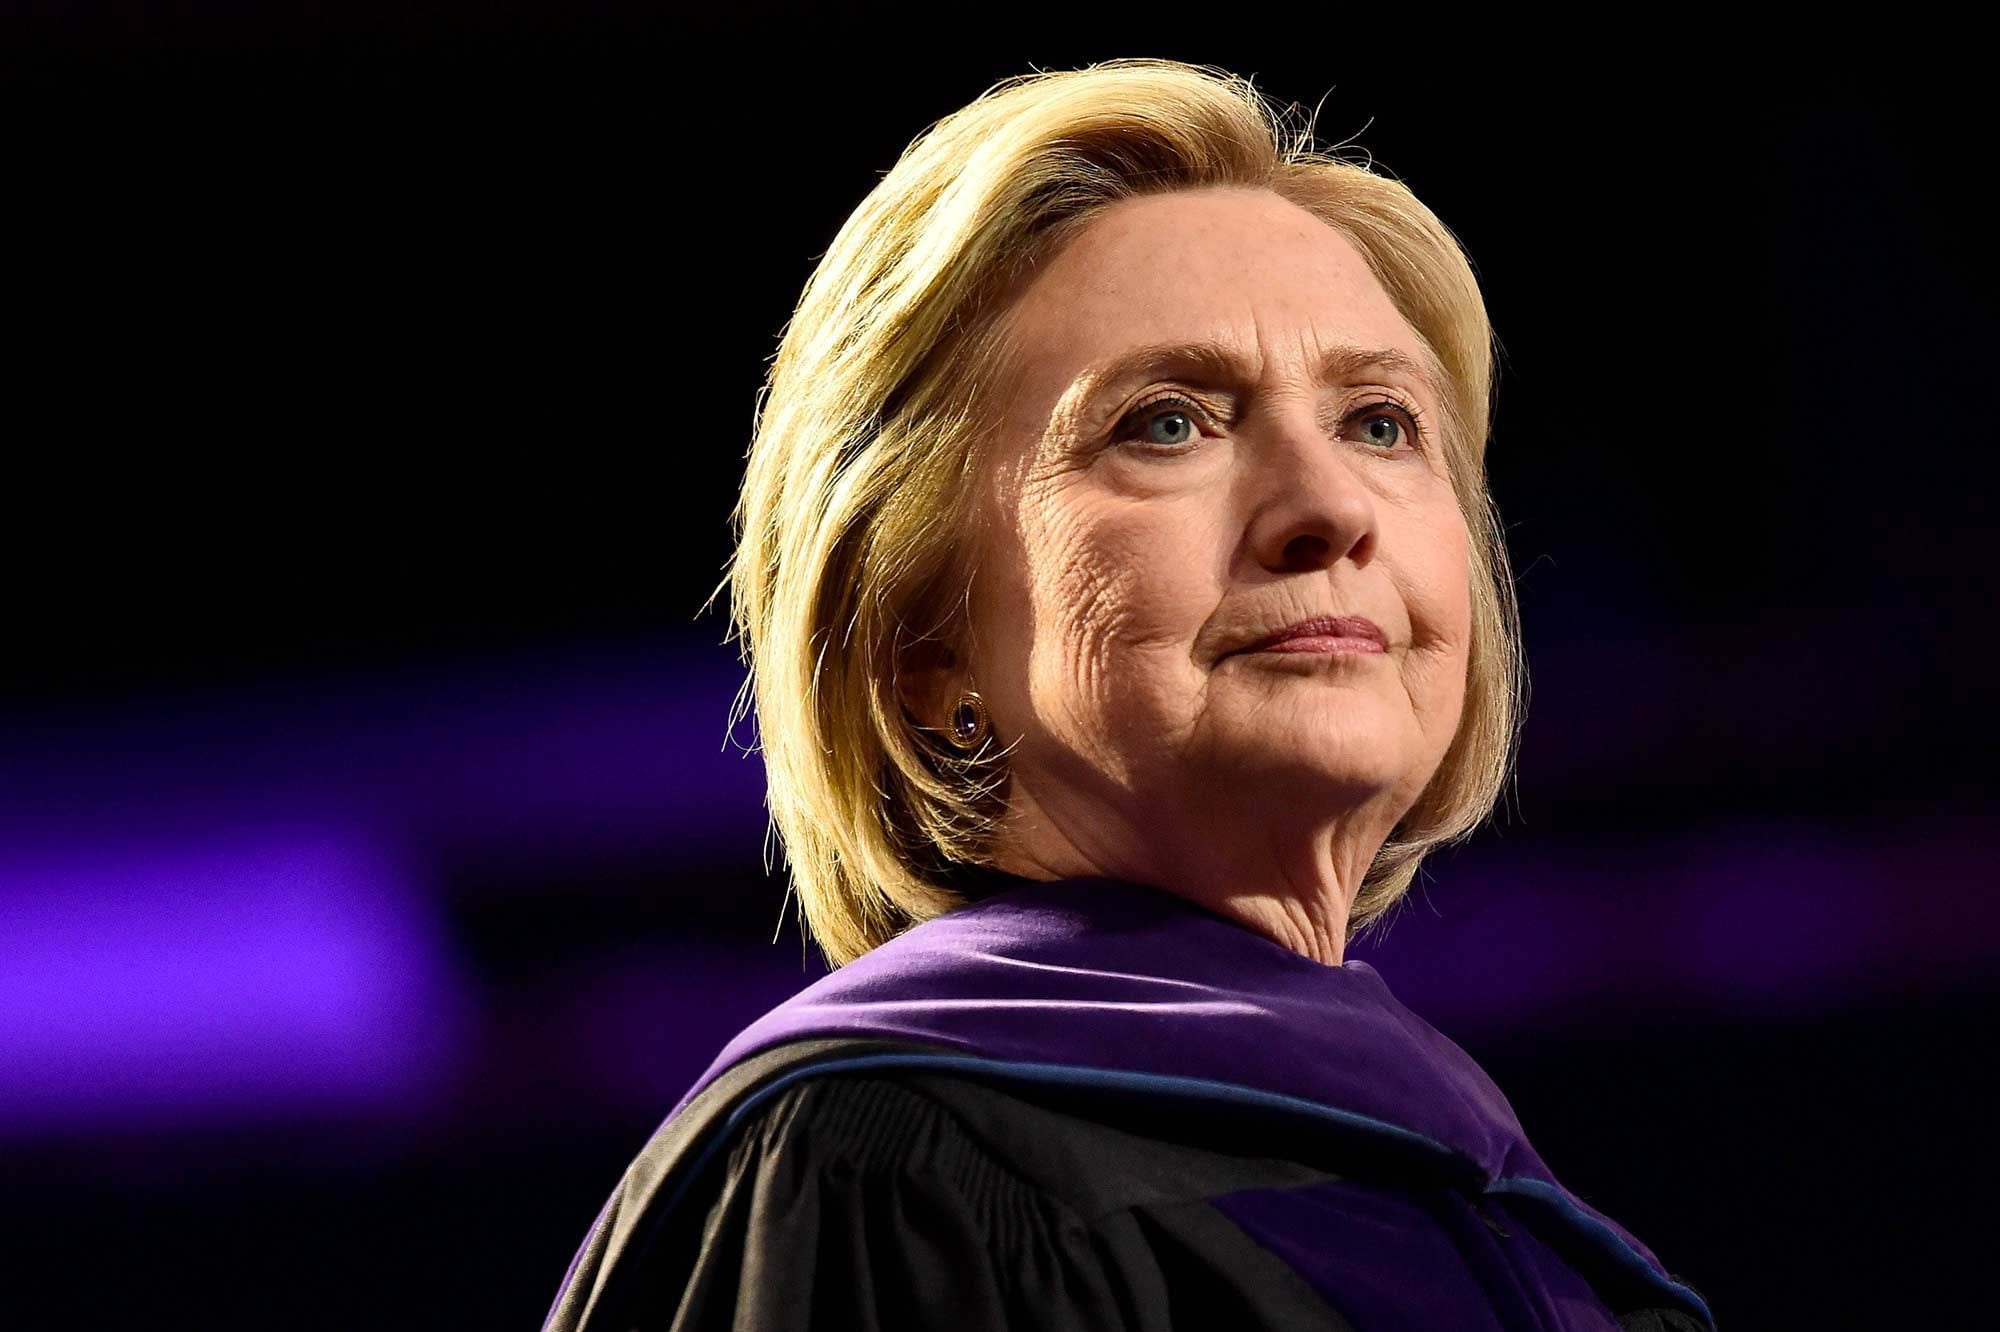 La Decision La Plus Courageuse De Sa Vie Selon Hillary Clinton Rester Mariee